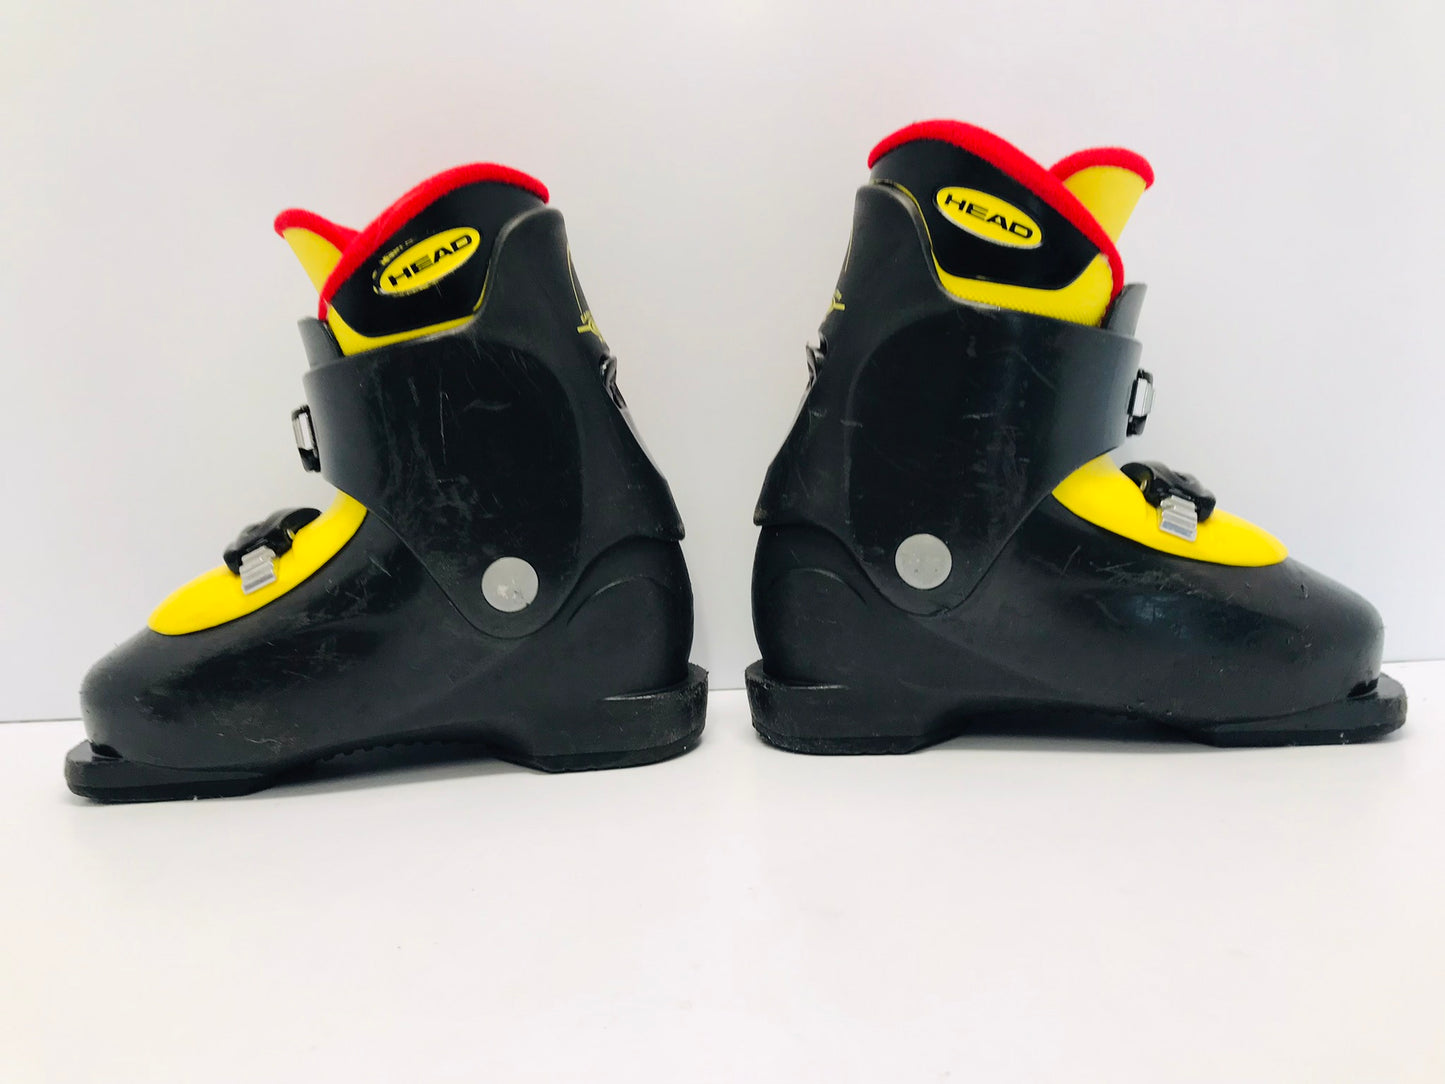 Ski Boots Mondo Size 19.0 Child Size 13-1  241 mm Head Carve Black Red Yellow